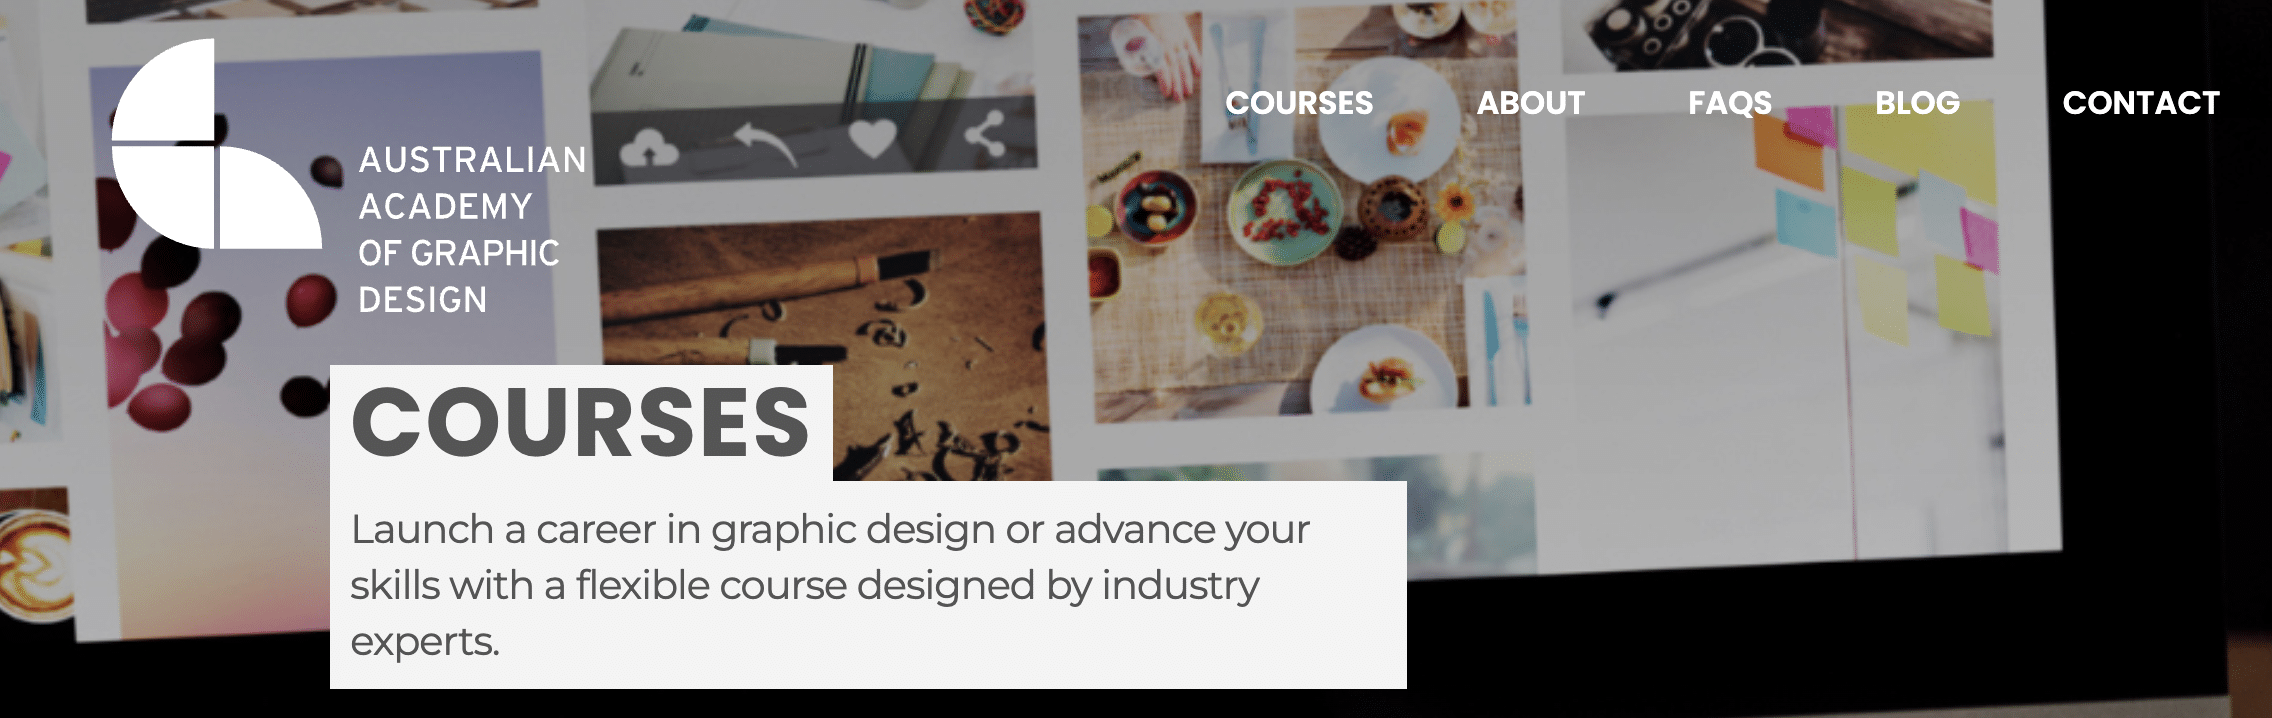 Australian Academy of Graphic Design Online Courses